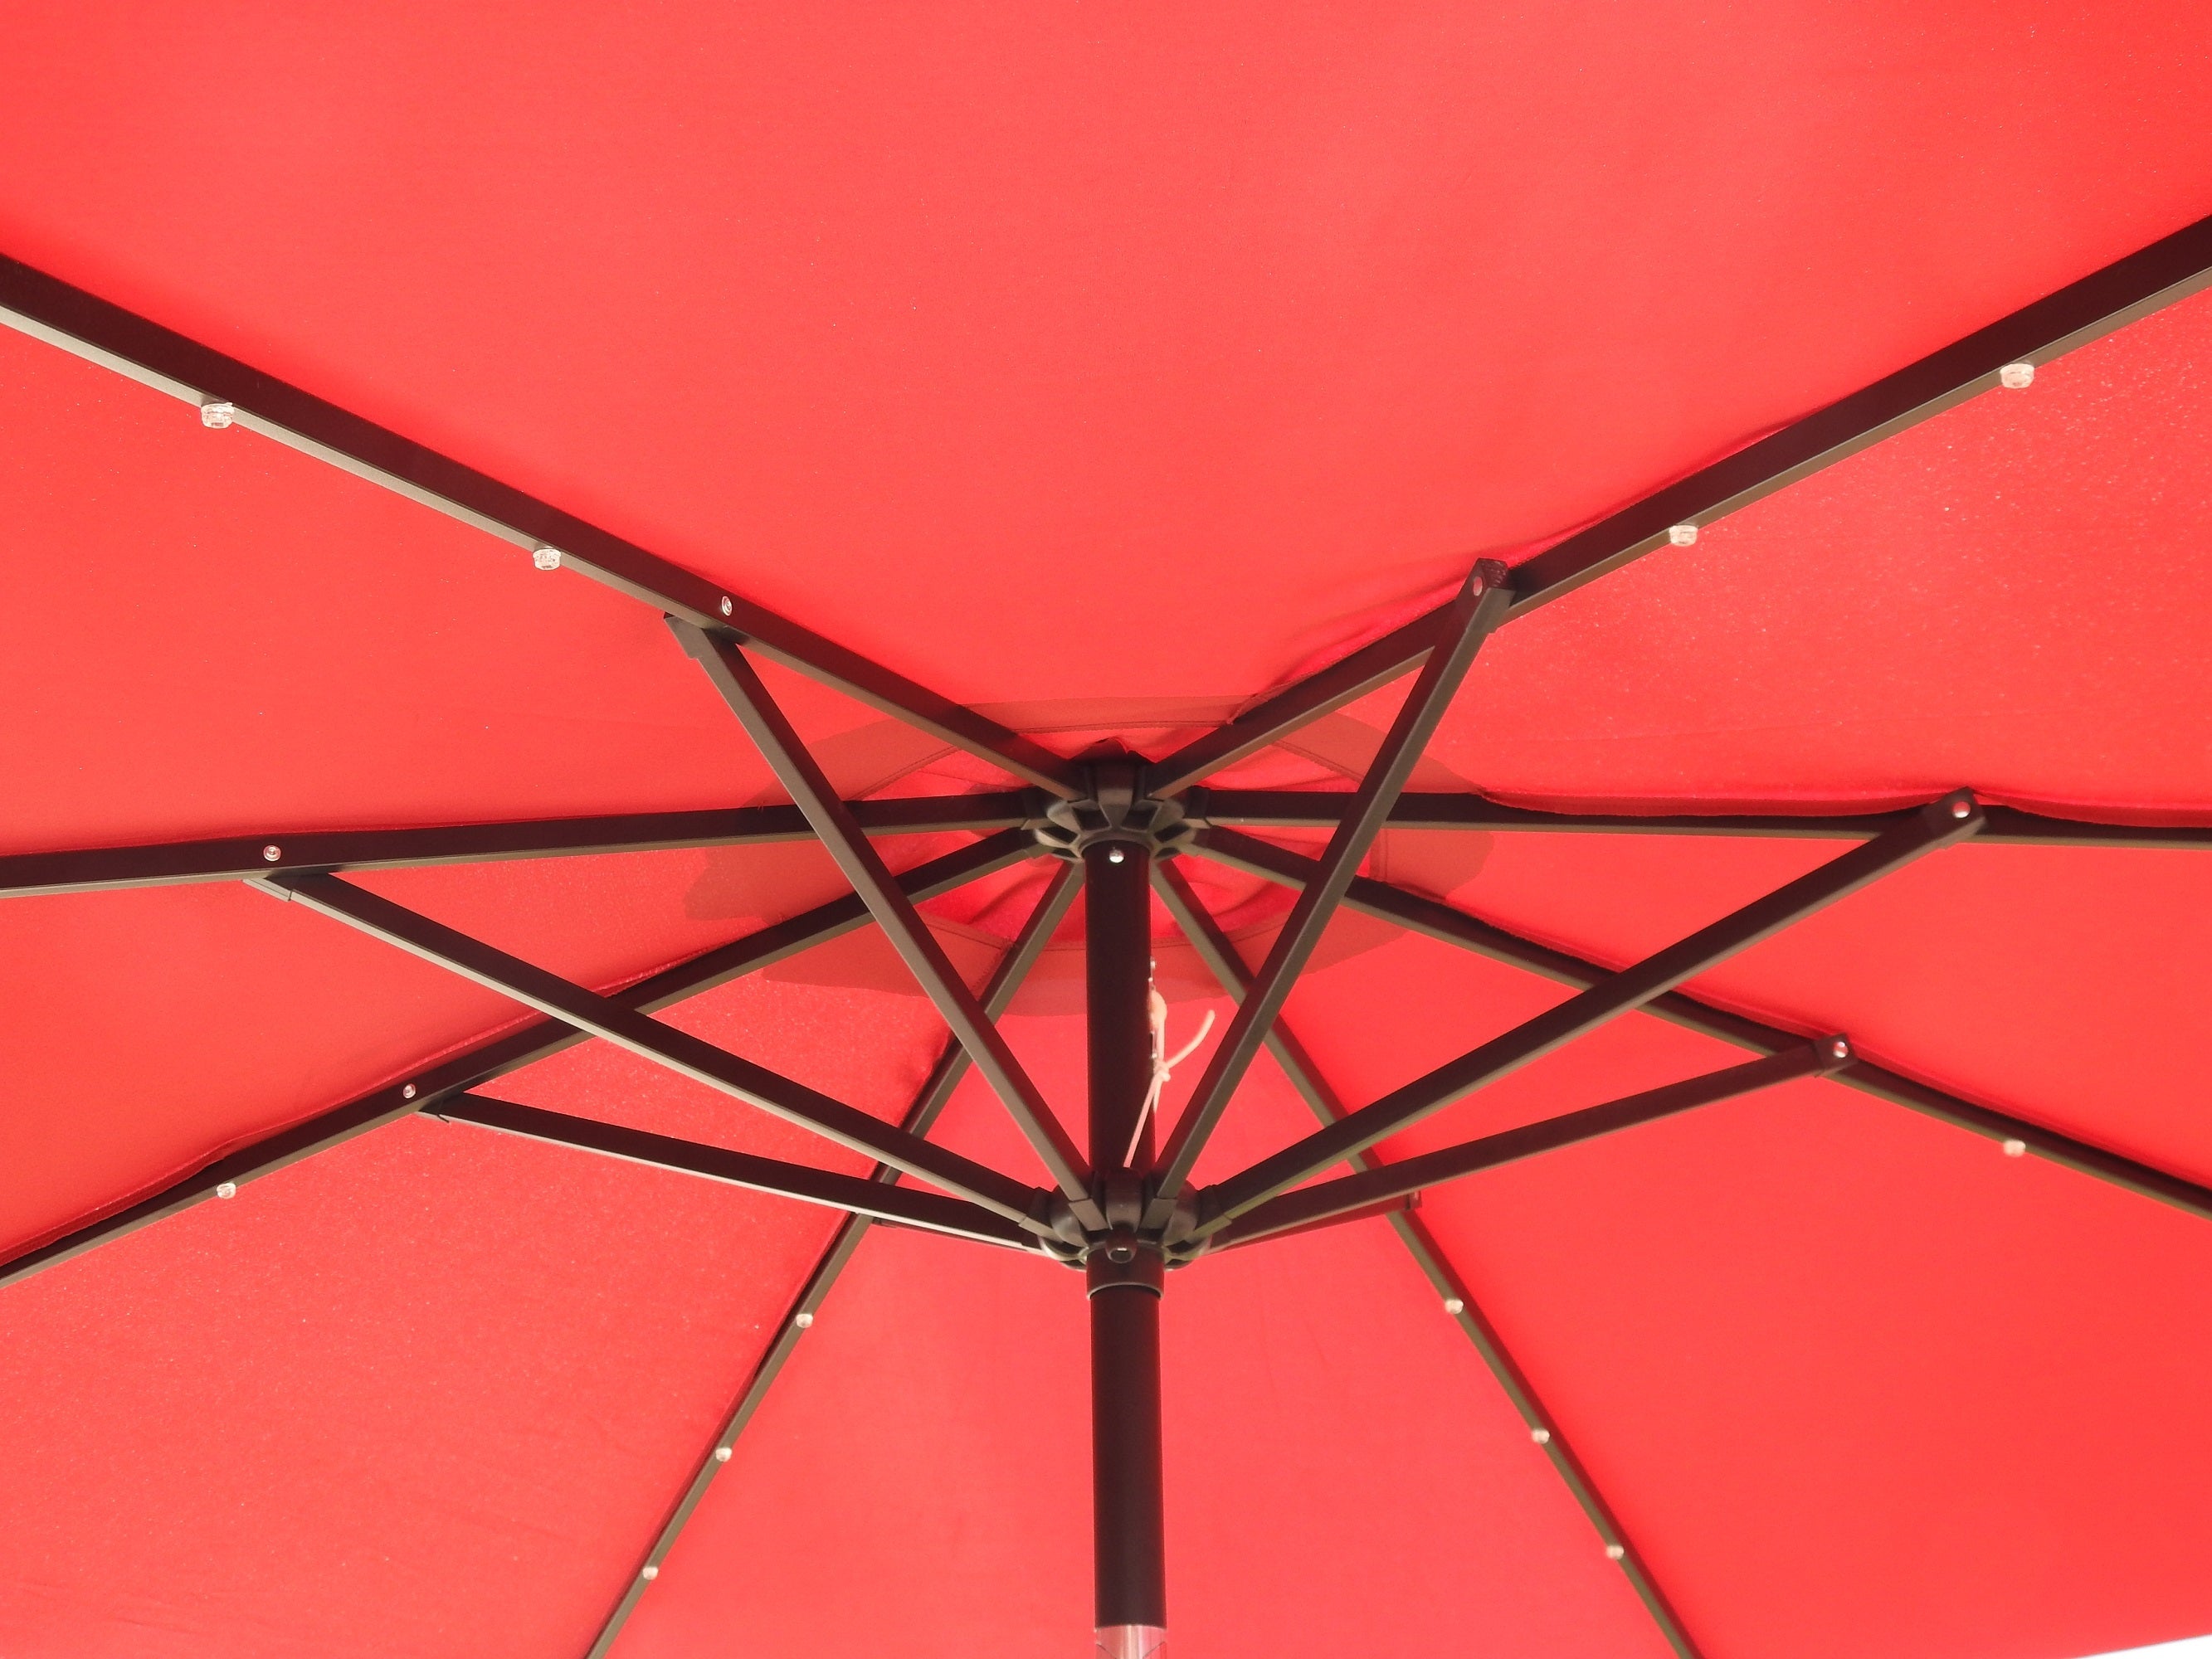 Hiland Solar Market Umbrella with Lights - Red